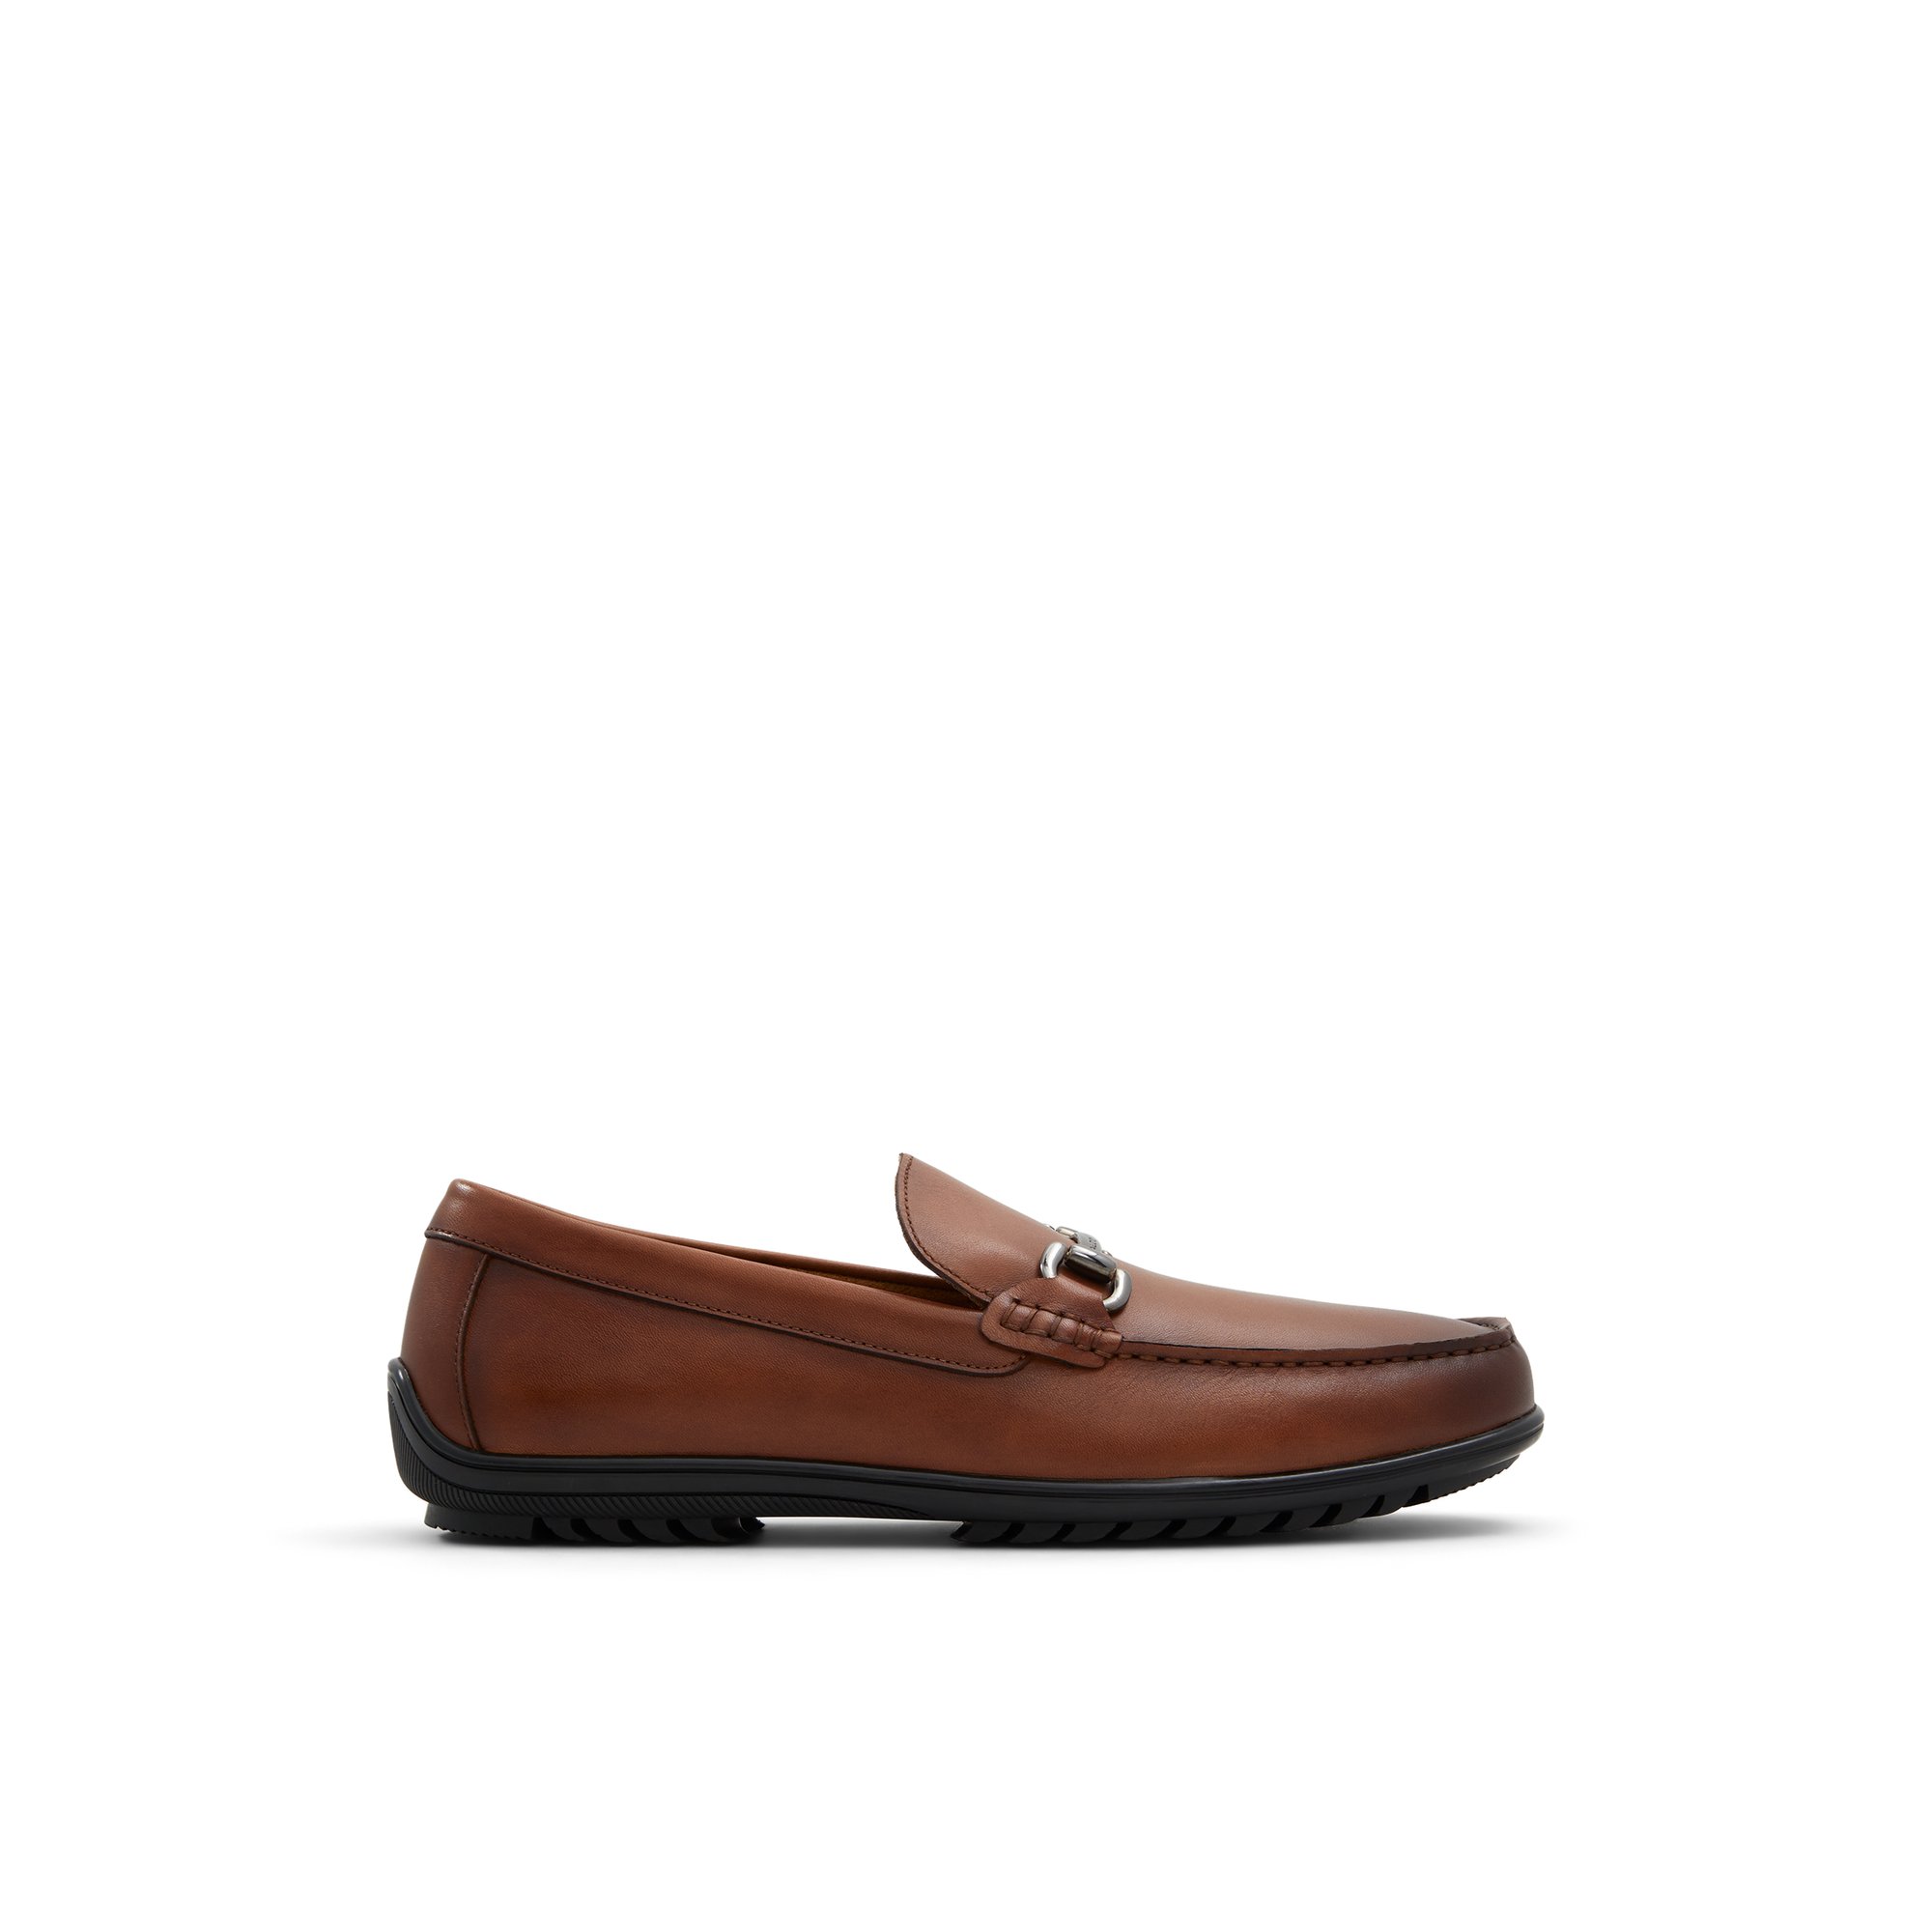 ALDO Evoke - Men's Casual Shoe - Brown